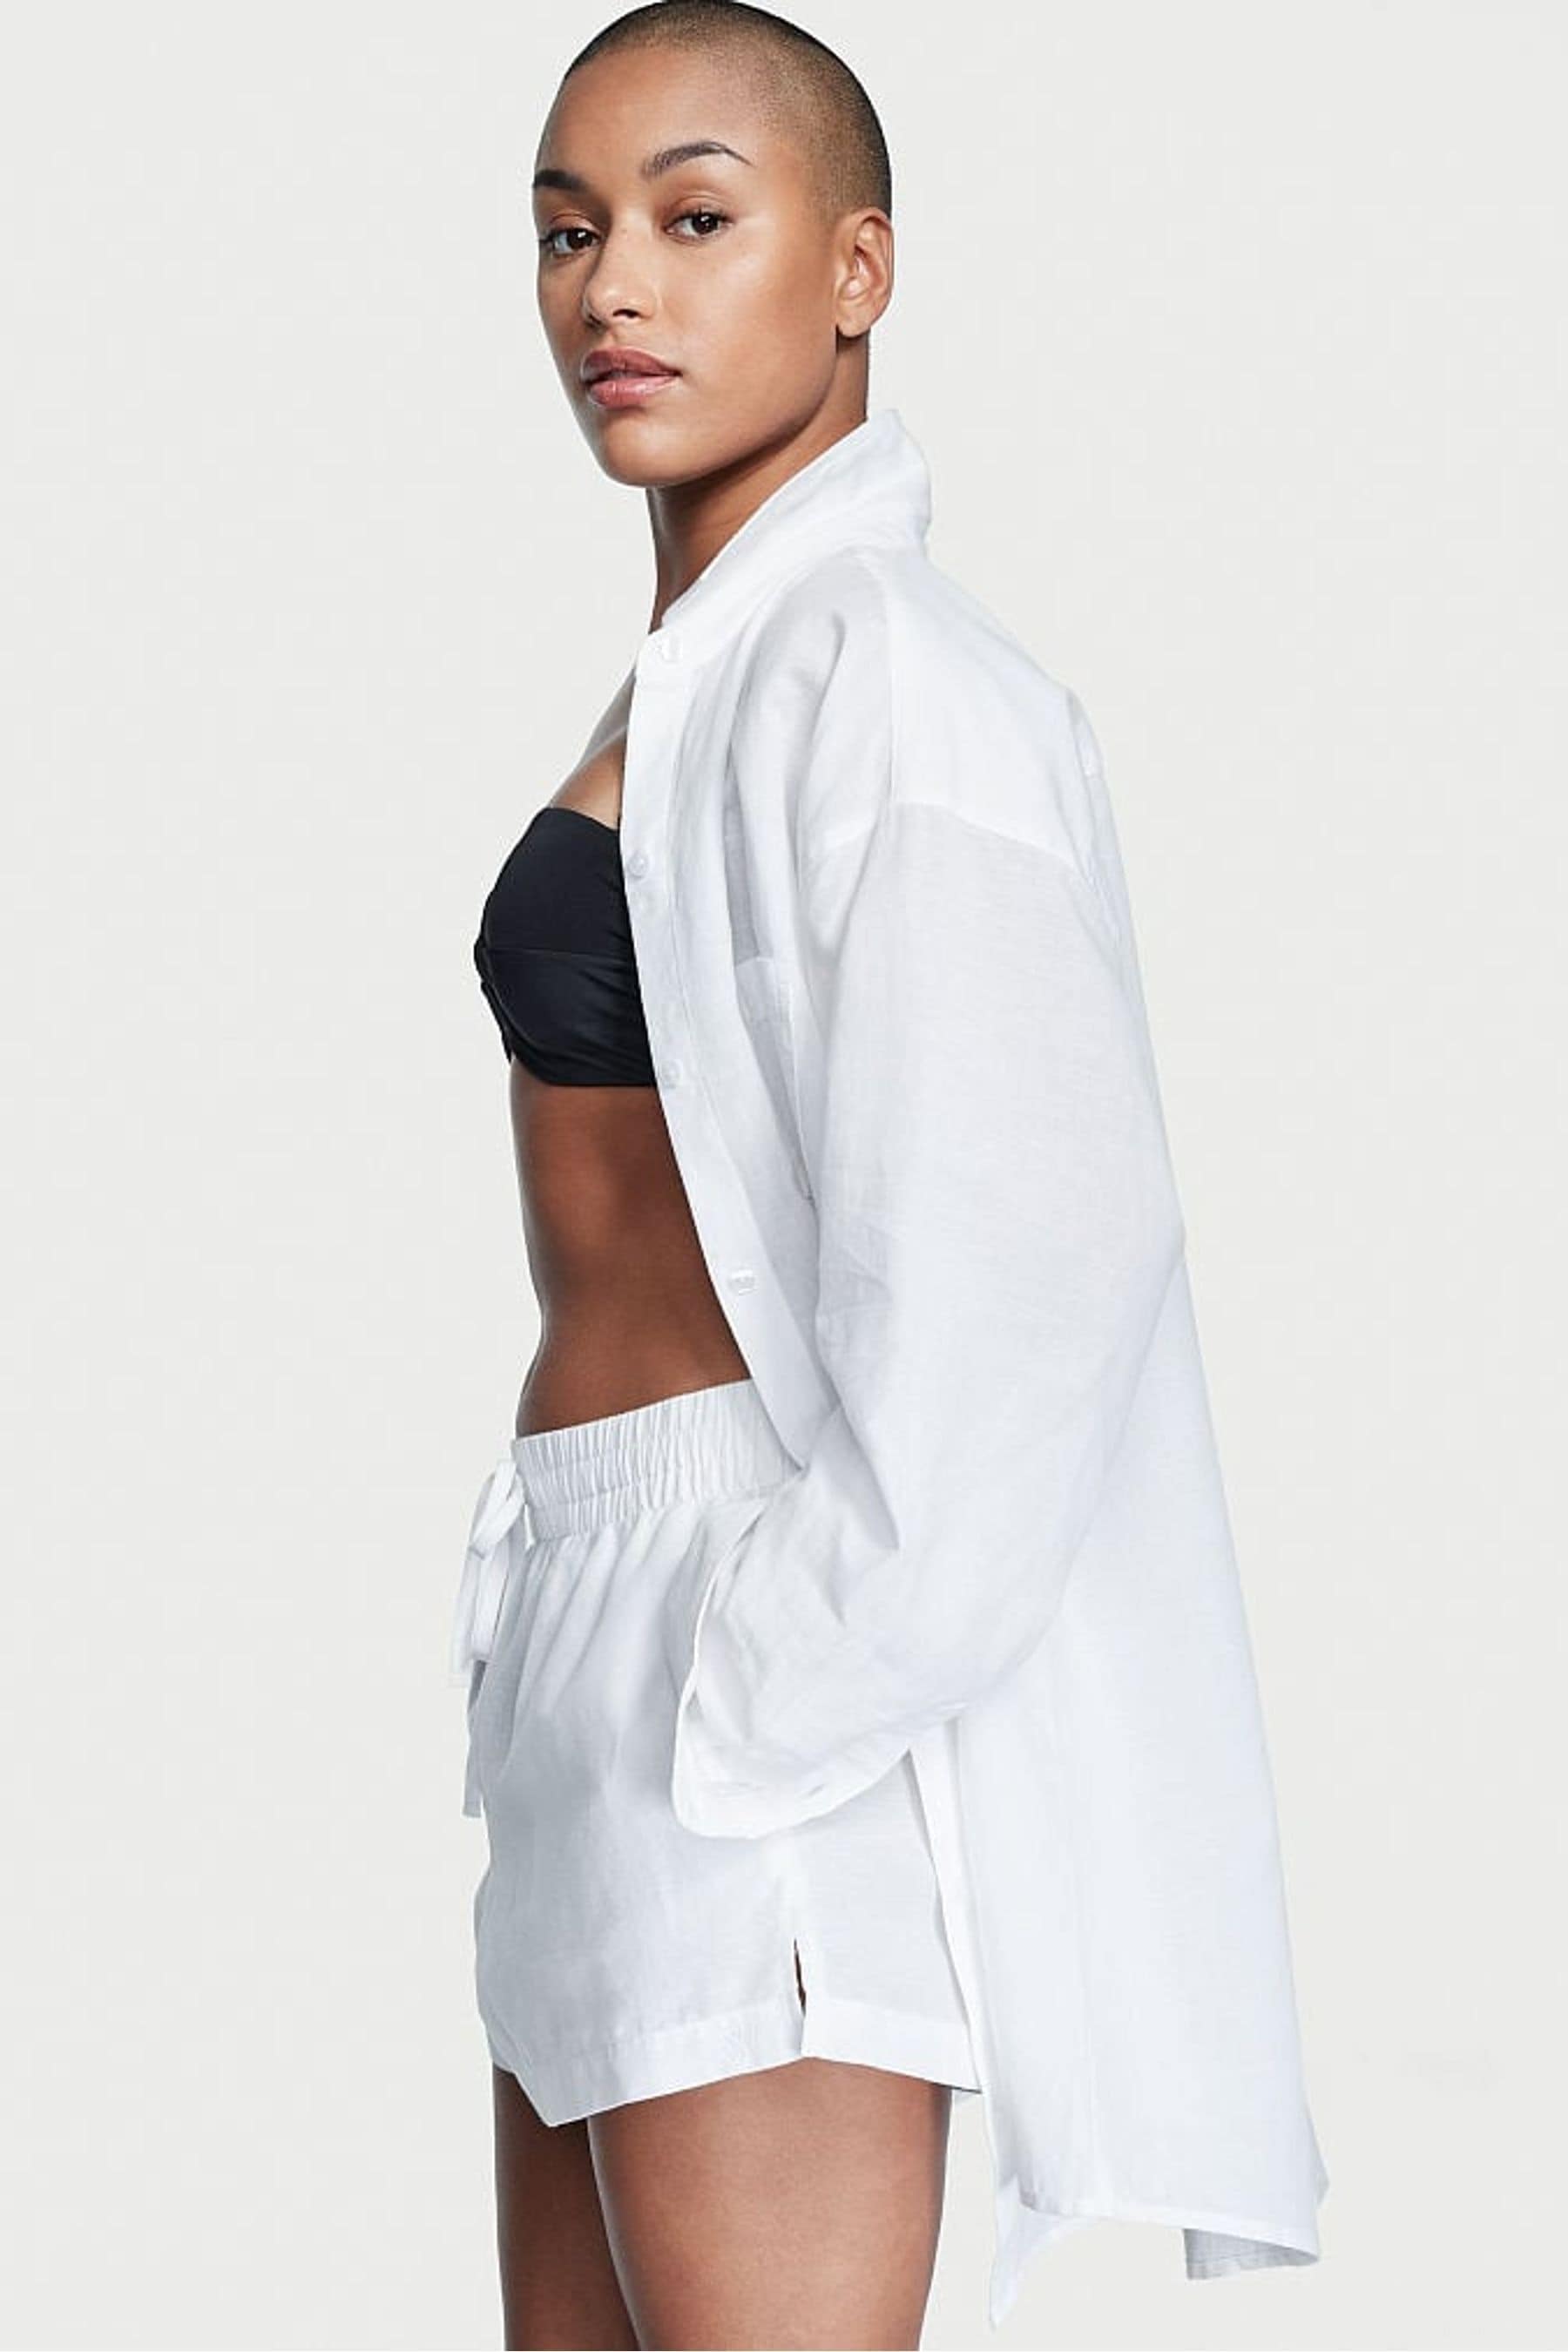 Buy Victoria's Secret White Linen Pyjama Short from the Next UK online shop